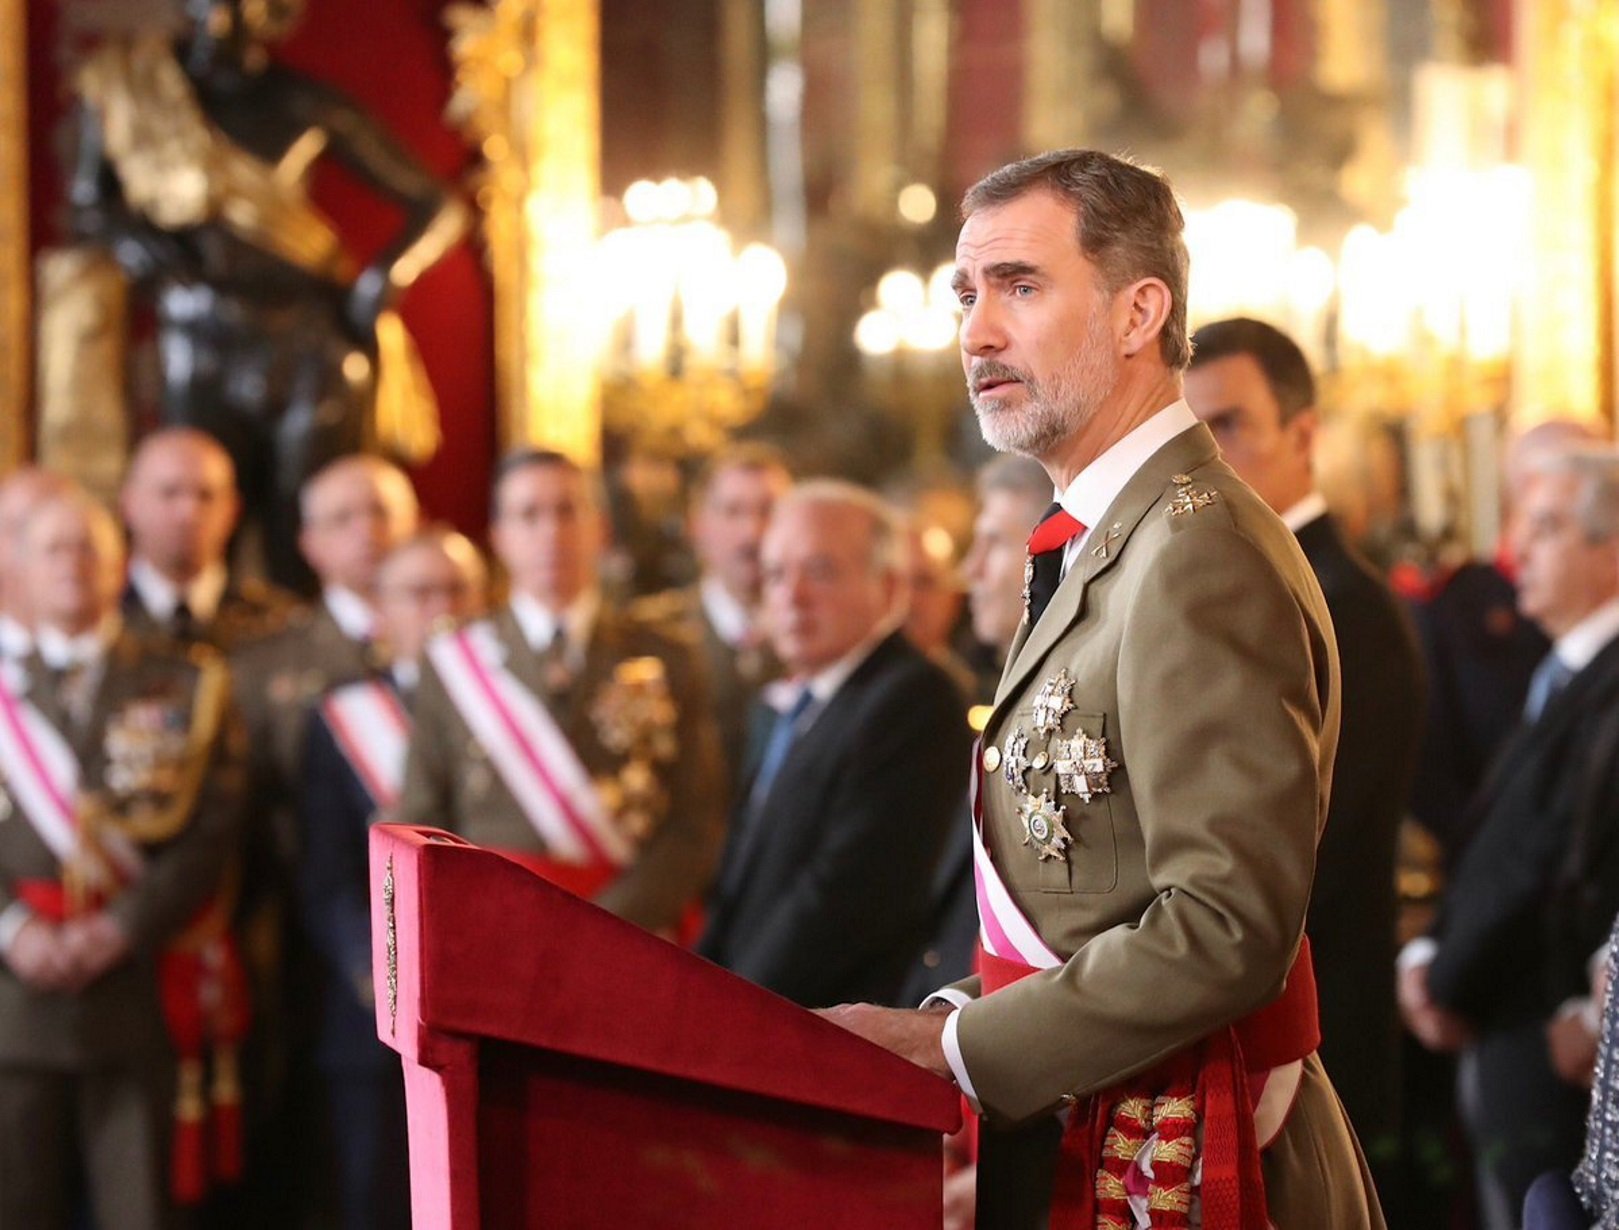 Felipe VI's ode to the Spanish flag: "It's the symbol of unity"